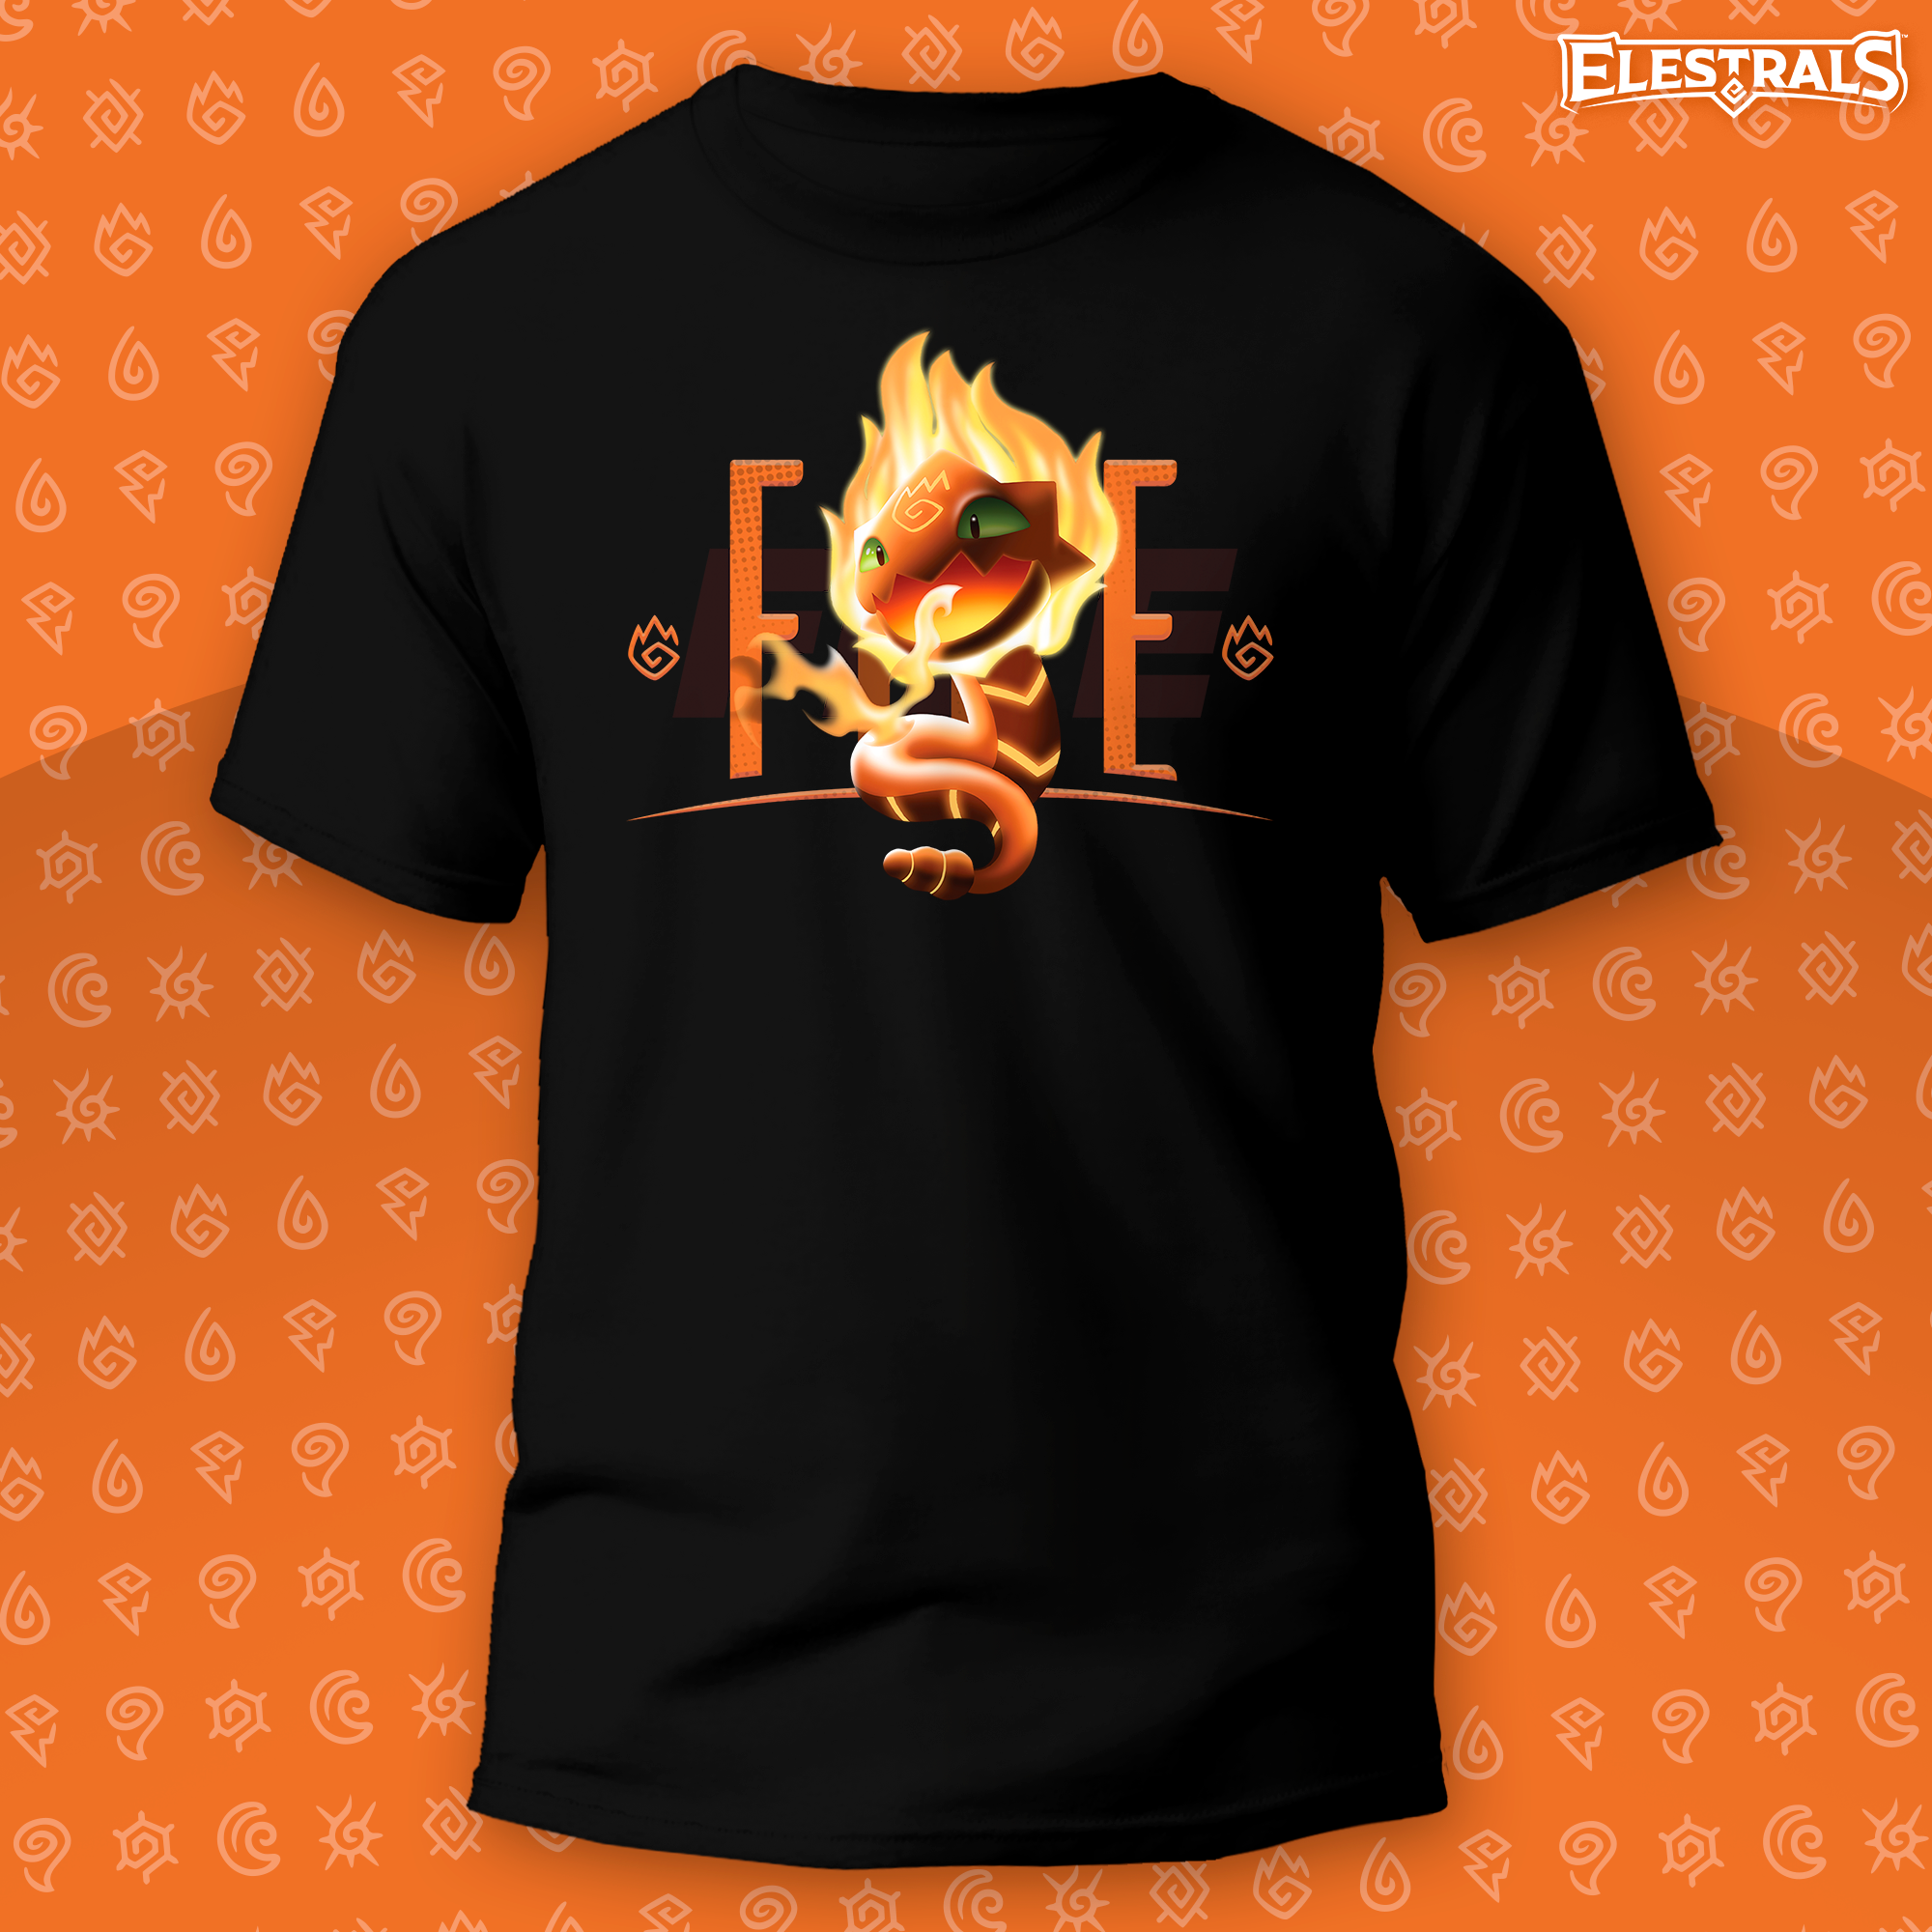 Vipyro Fire Spirit Graphic T-Shirt - Adult